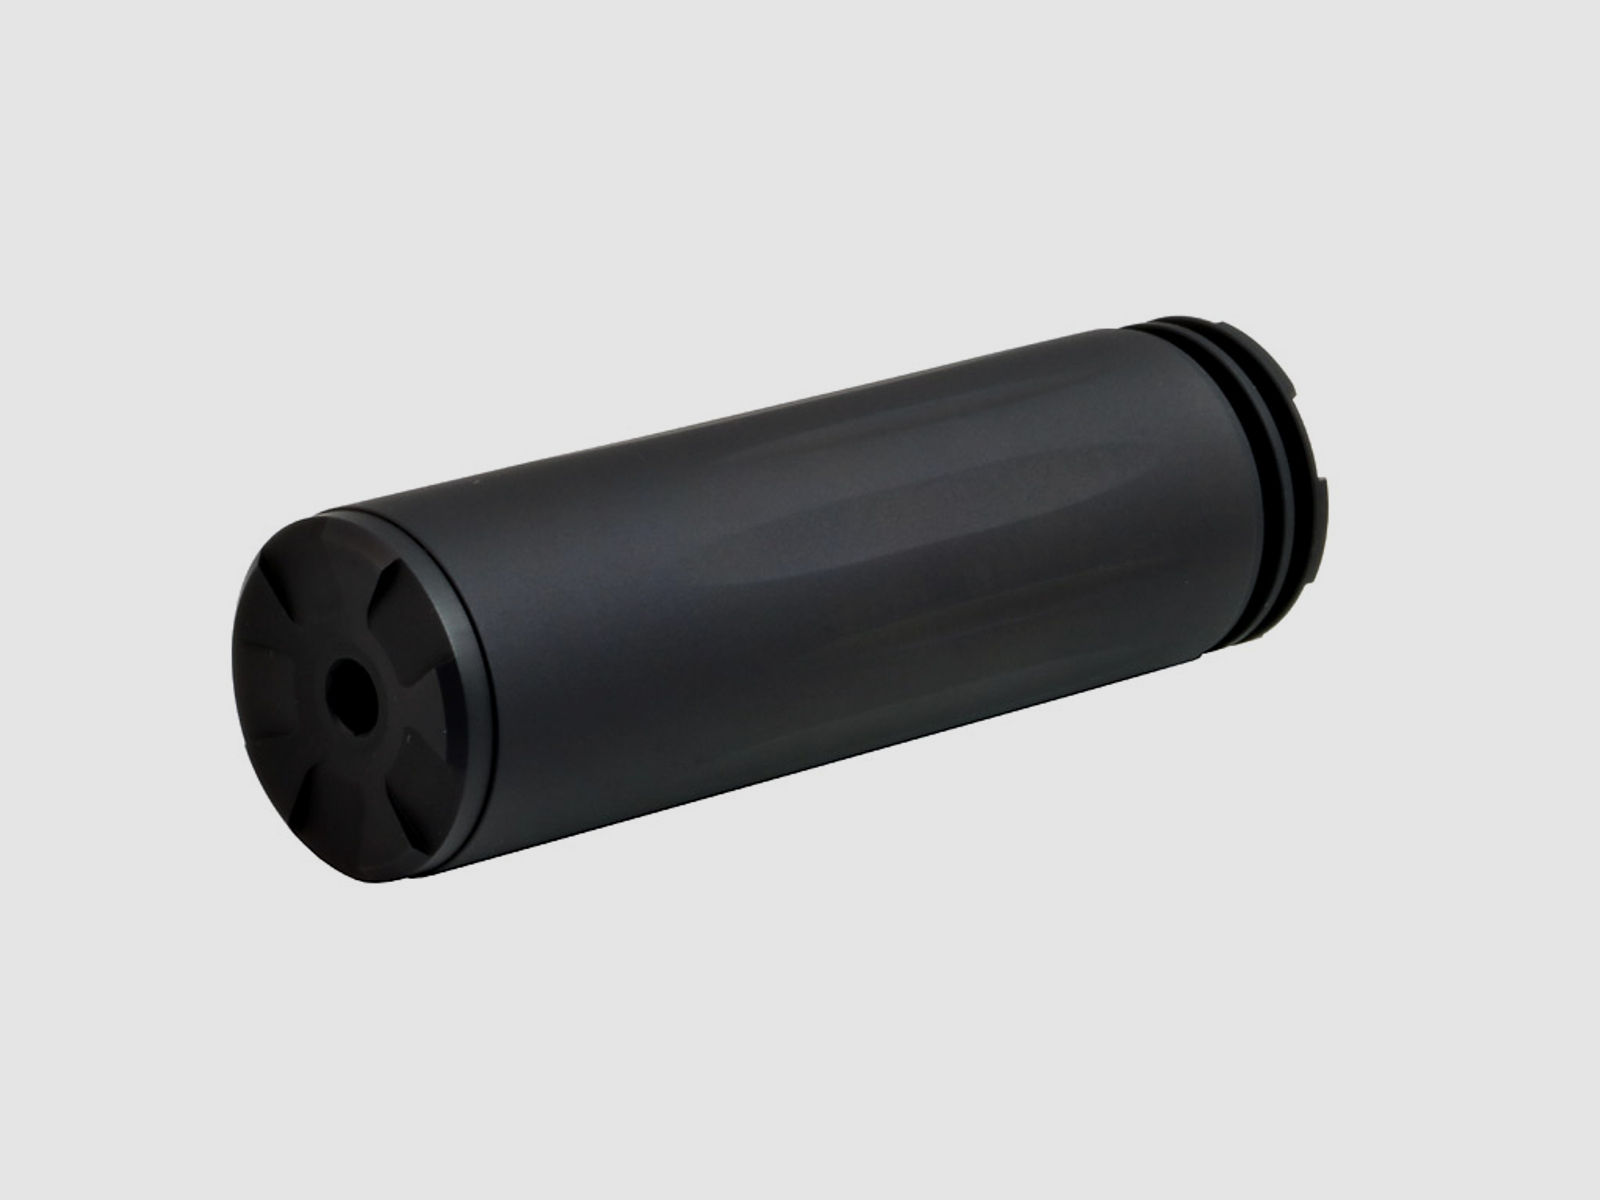 Weihrauch SchalldĂ¤mpfer XL-K schraubbar 1/2 Zoll UNF Gewinde schwarz Kaliber 4,5 bis 5,5 mm (P18)